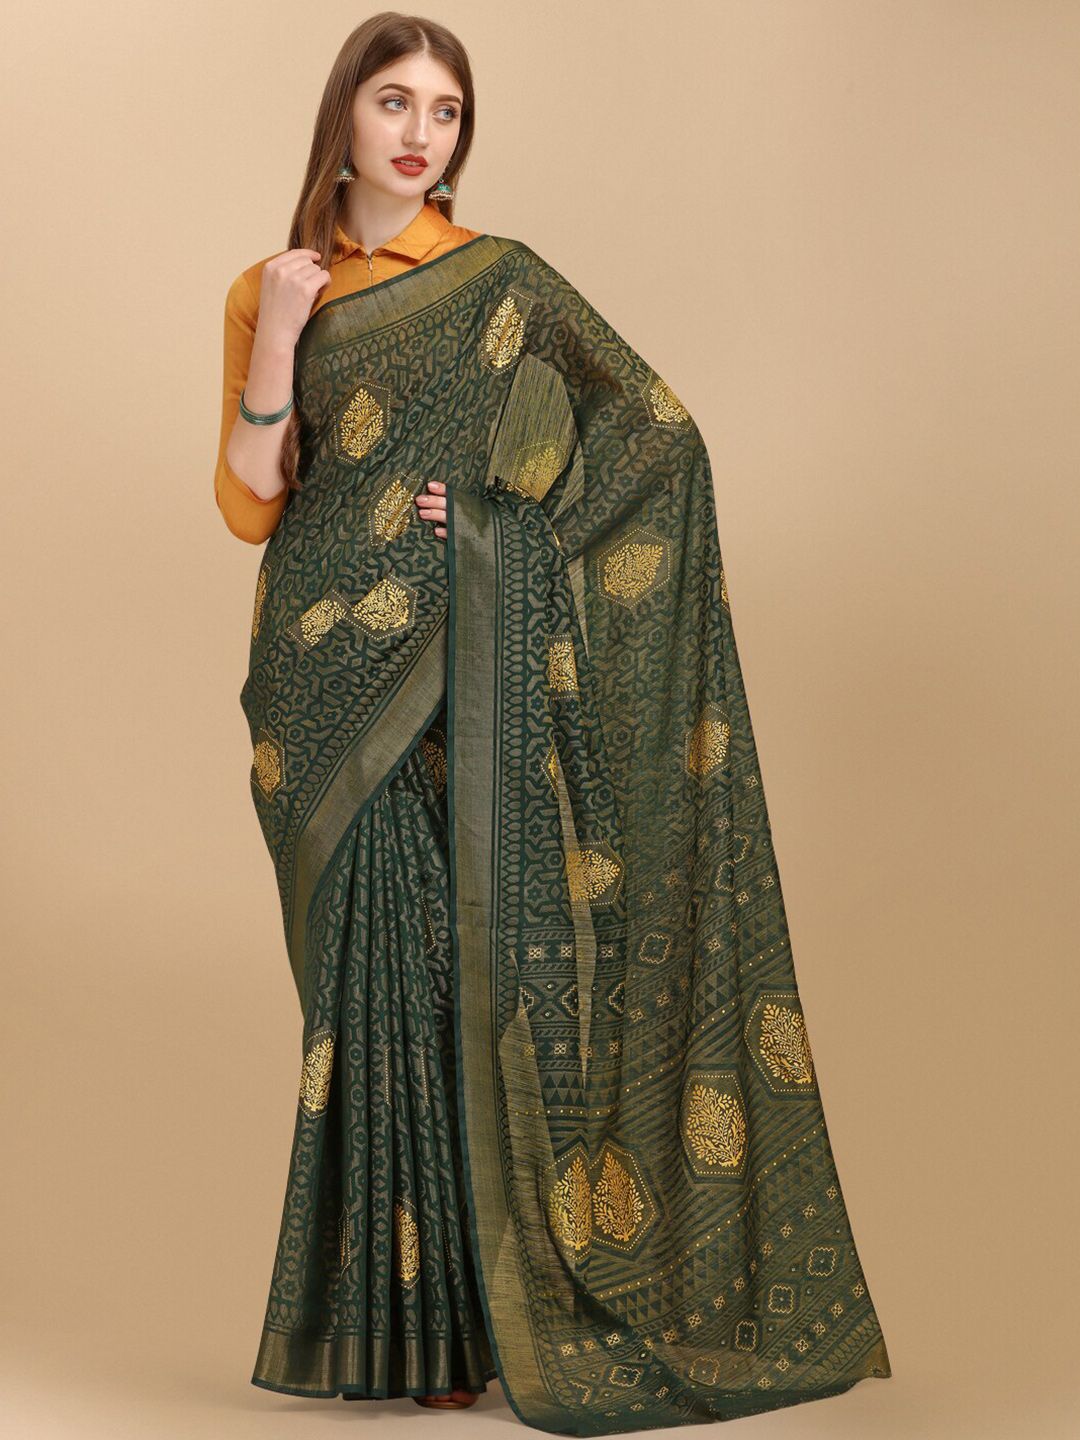 Sangria Green & Gold-Toned Ethnic Motifs Zari Pure Cotton Saree Price in India